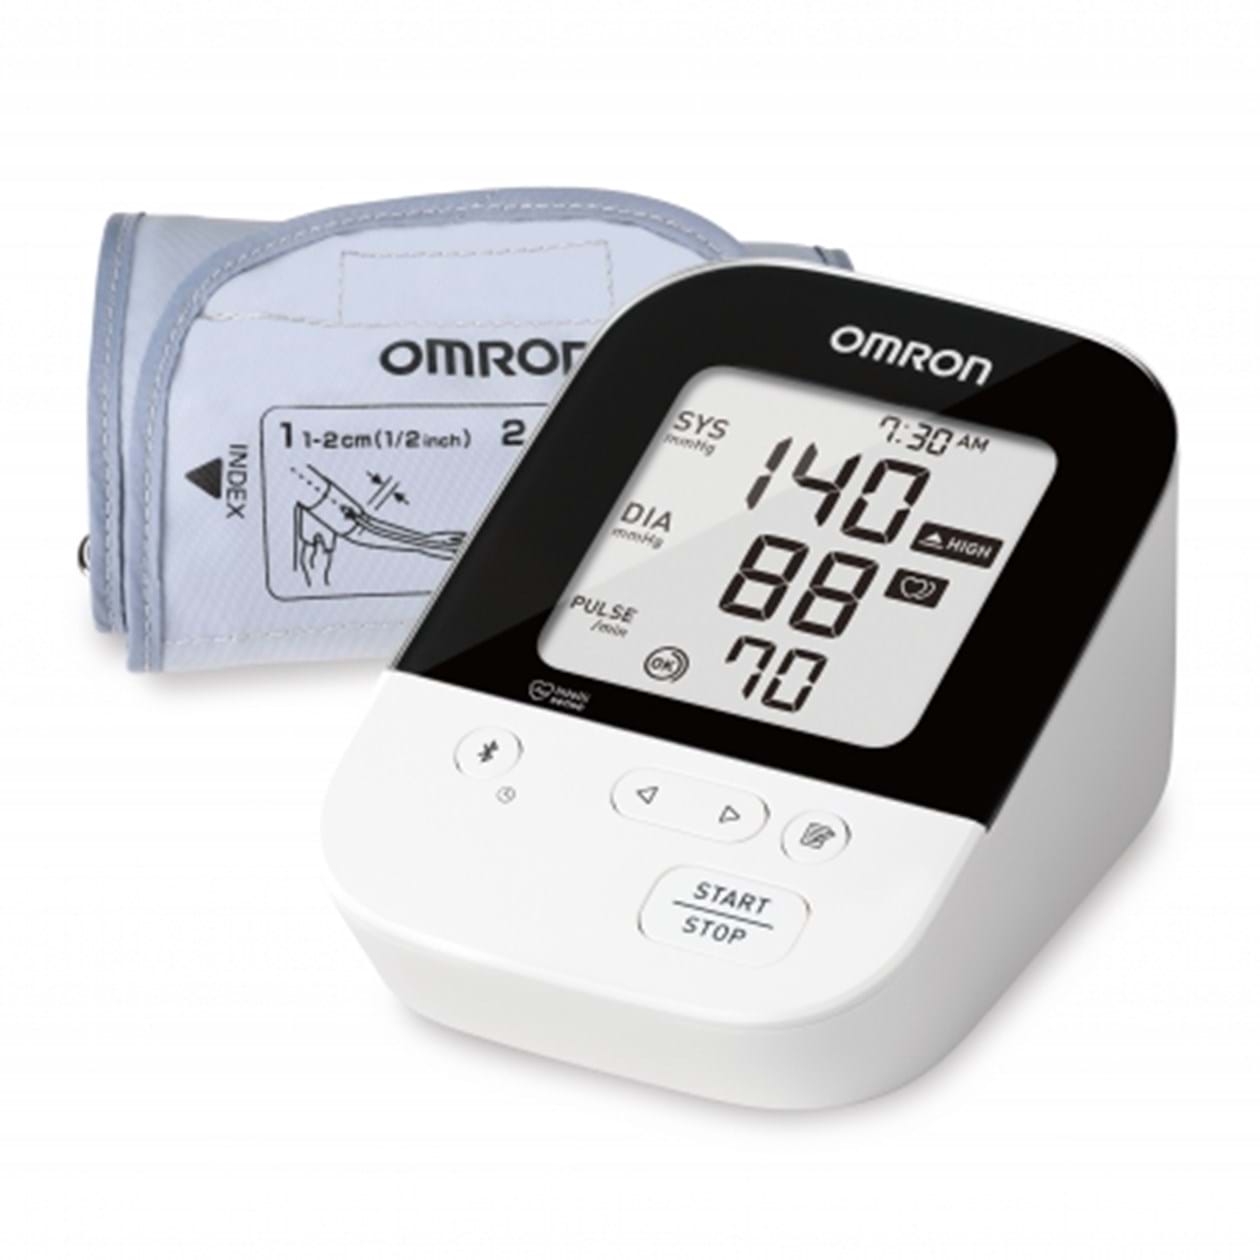 Omron Intellisense Automatic  Blood Pressure Monitor (Arm Type) with Bluetooth HEM-7157